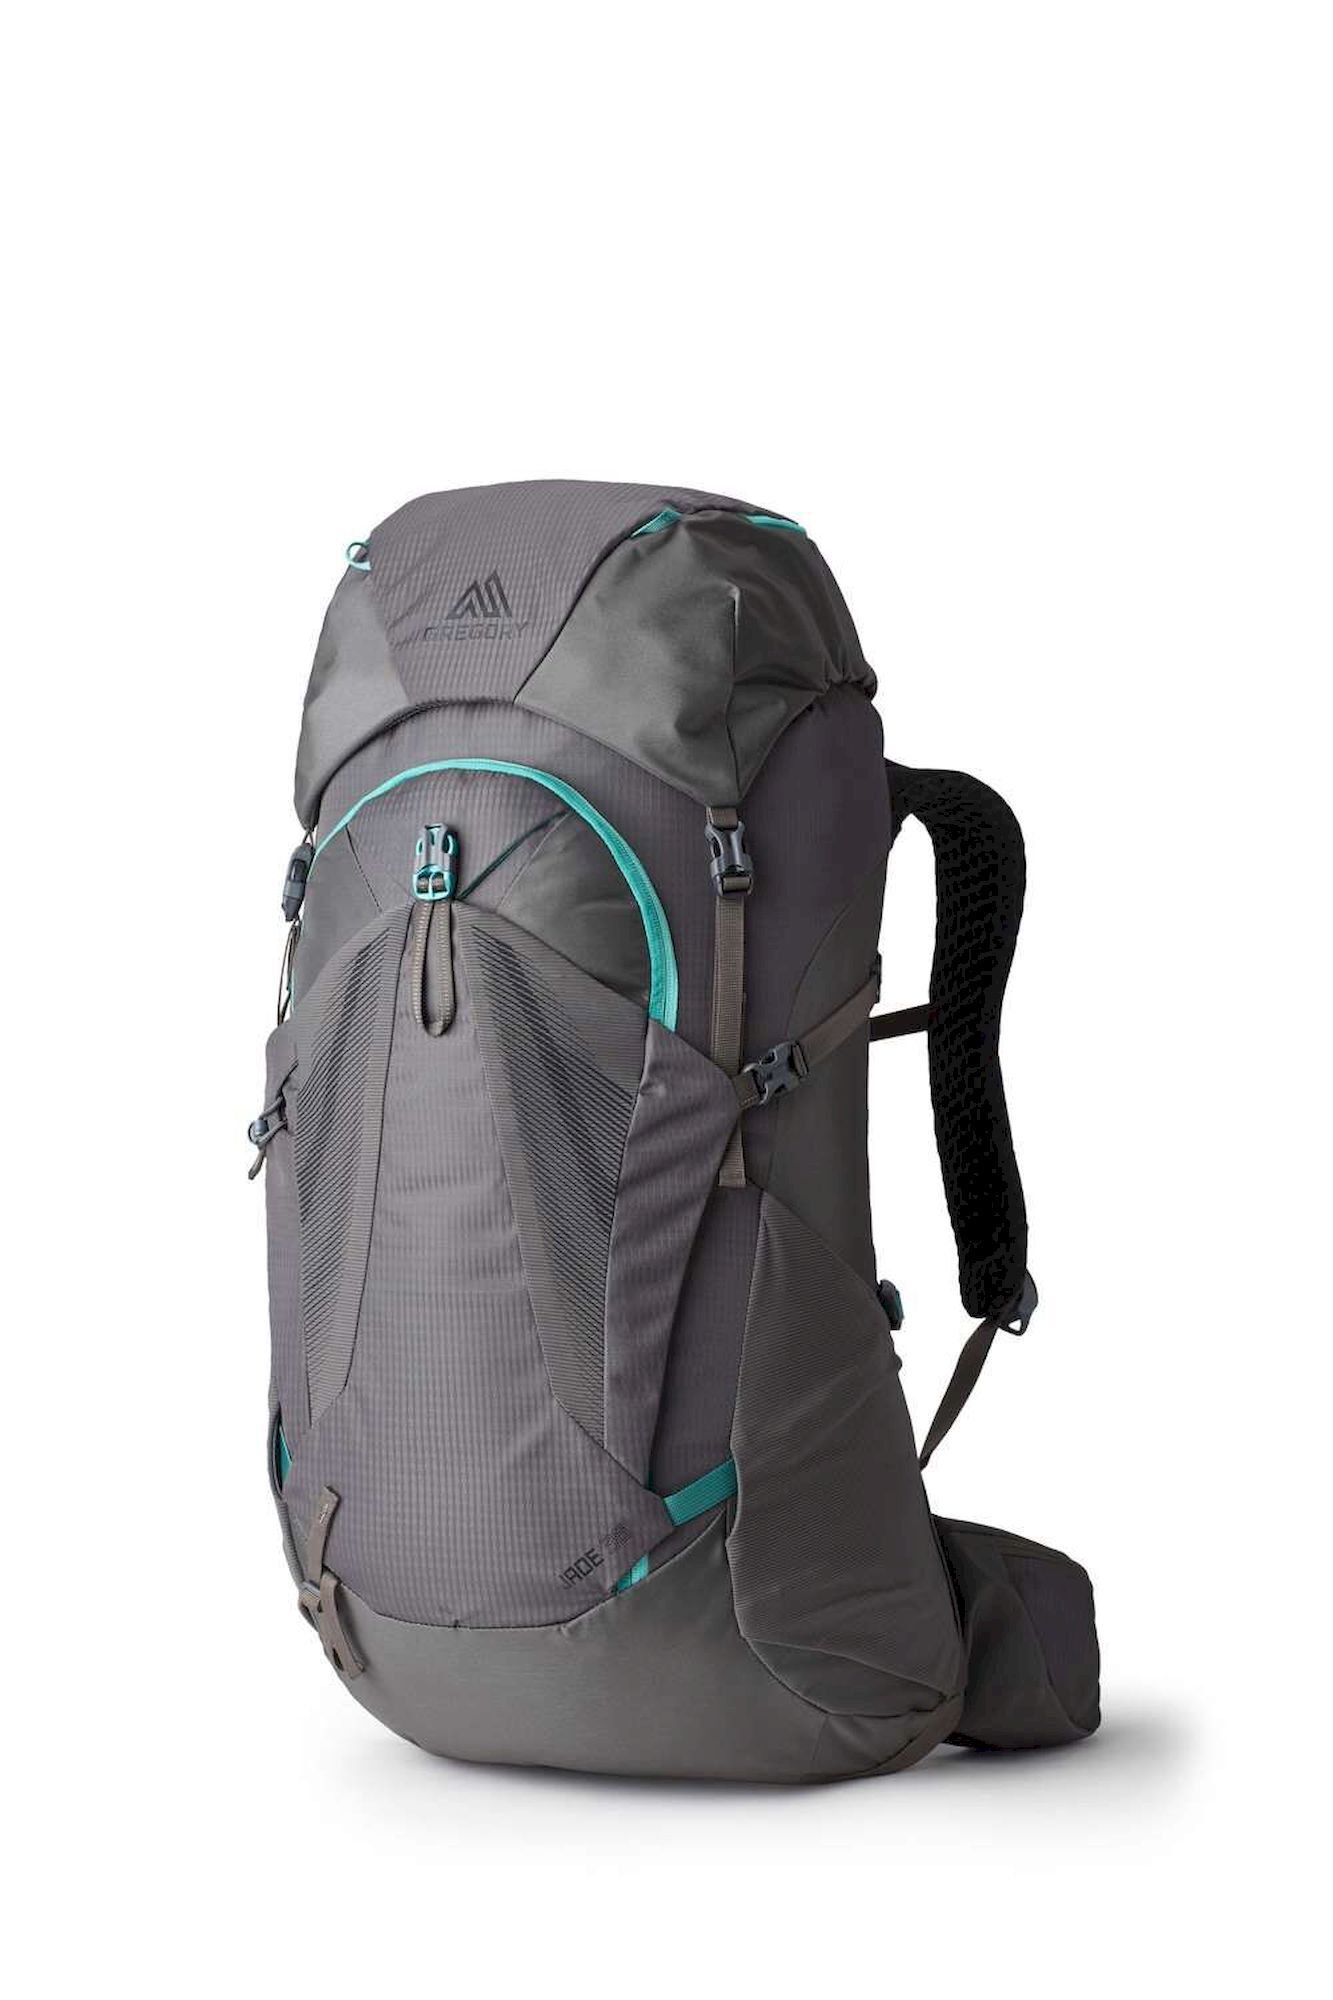 Gregory Jade 38 - Hiking backpack - Women's